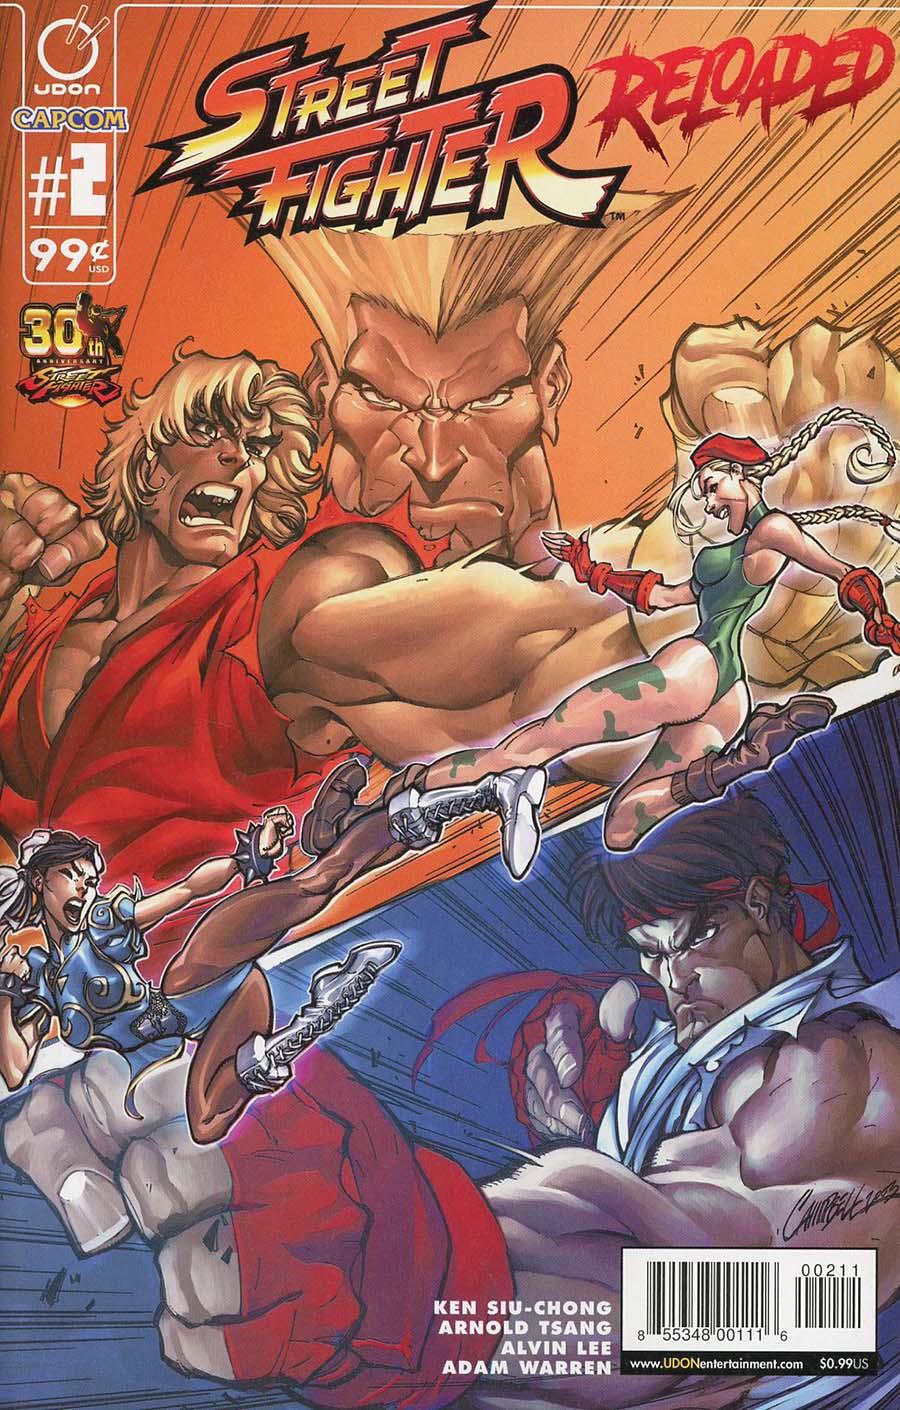 Street Fighter Reloaded Vol. 1 #2